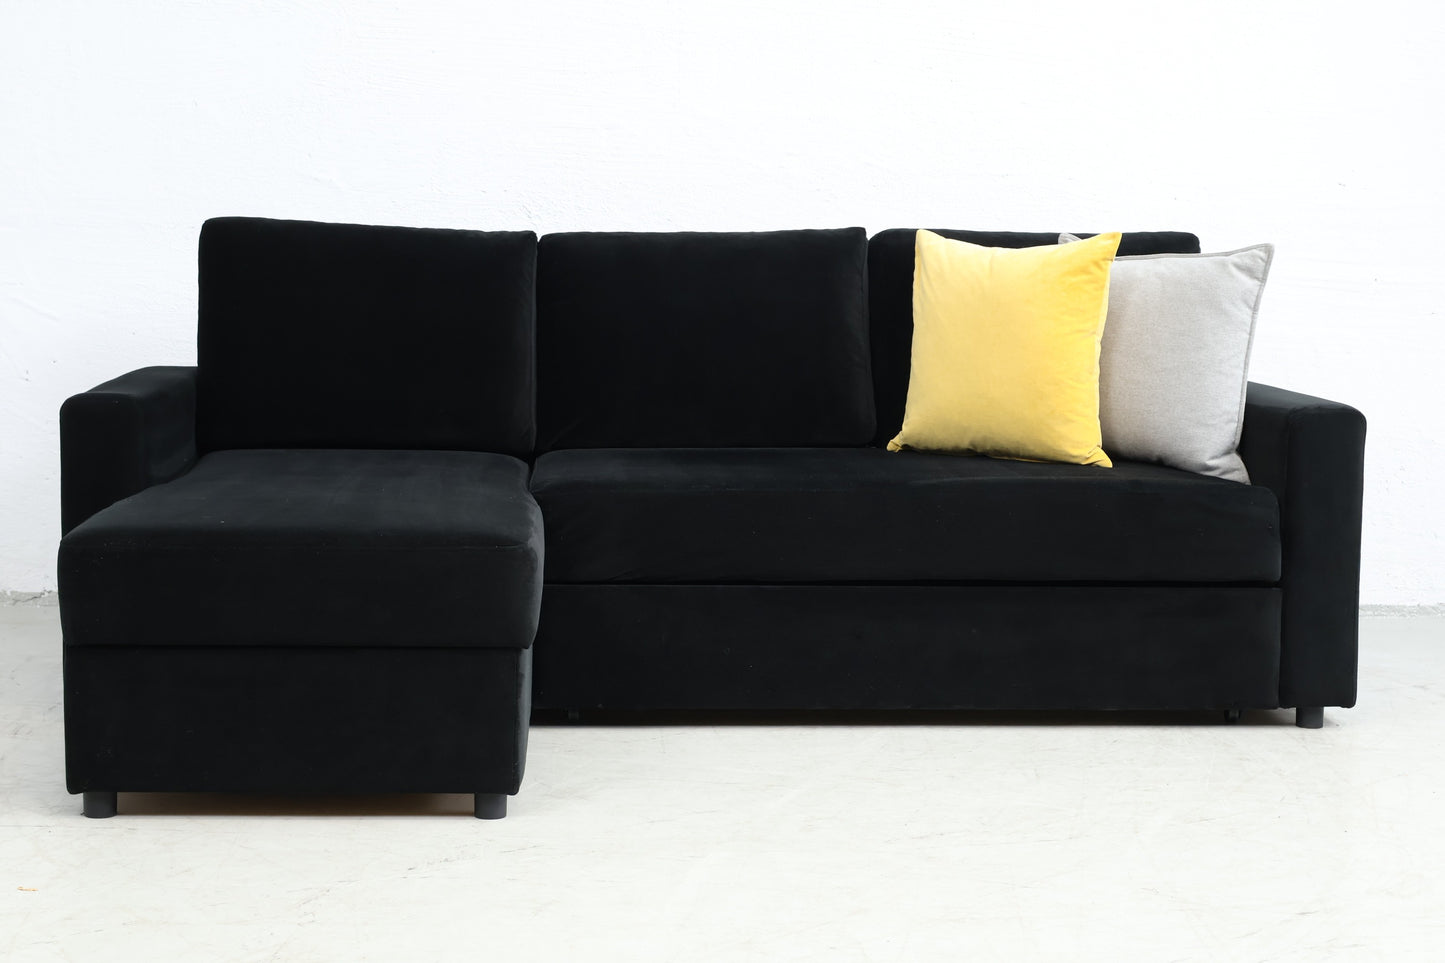 Nyrenset | Vendbar velur sovesofa fra A-Møbler